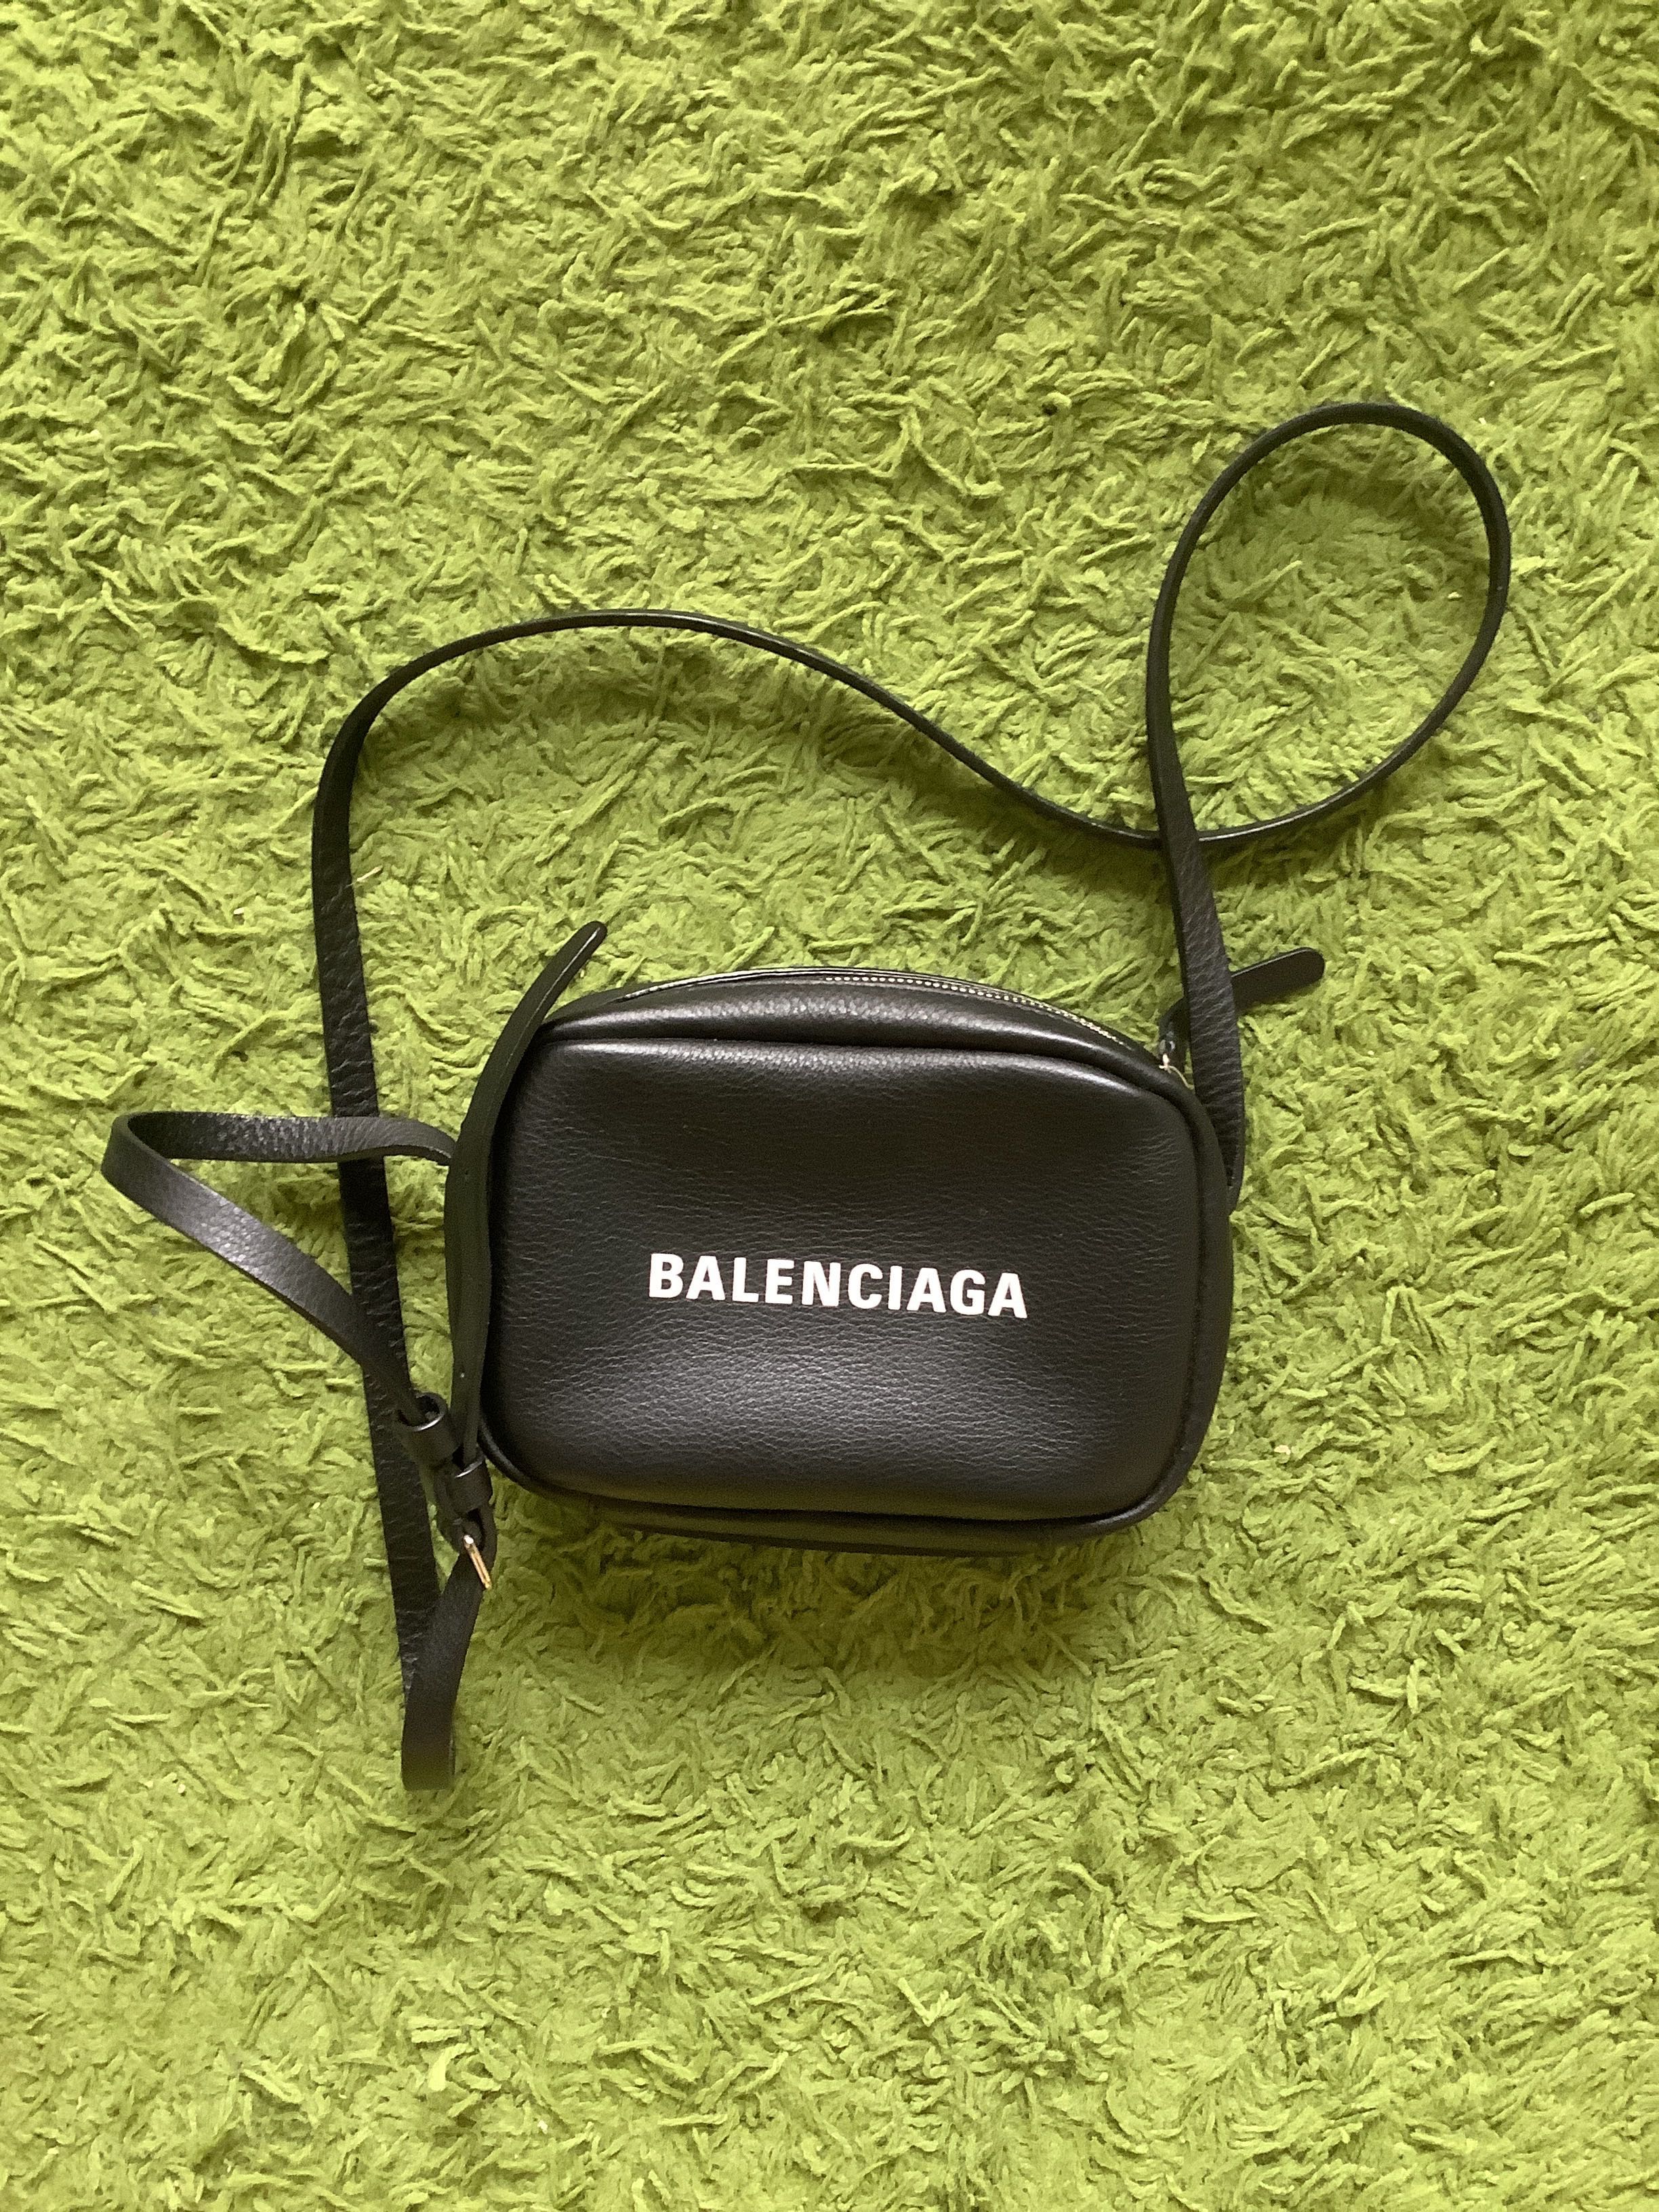 Balenciaga everyday camera bag xs on Mercari  Black camera bag Fashion  obsession Fashion